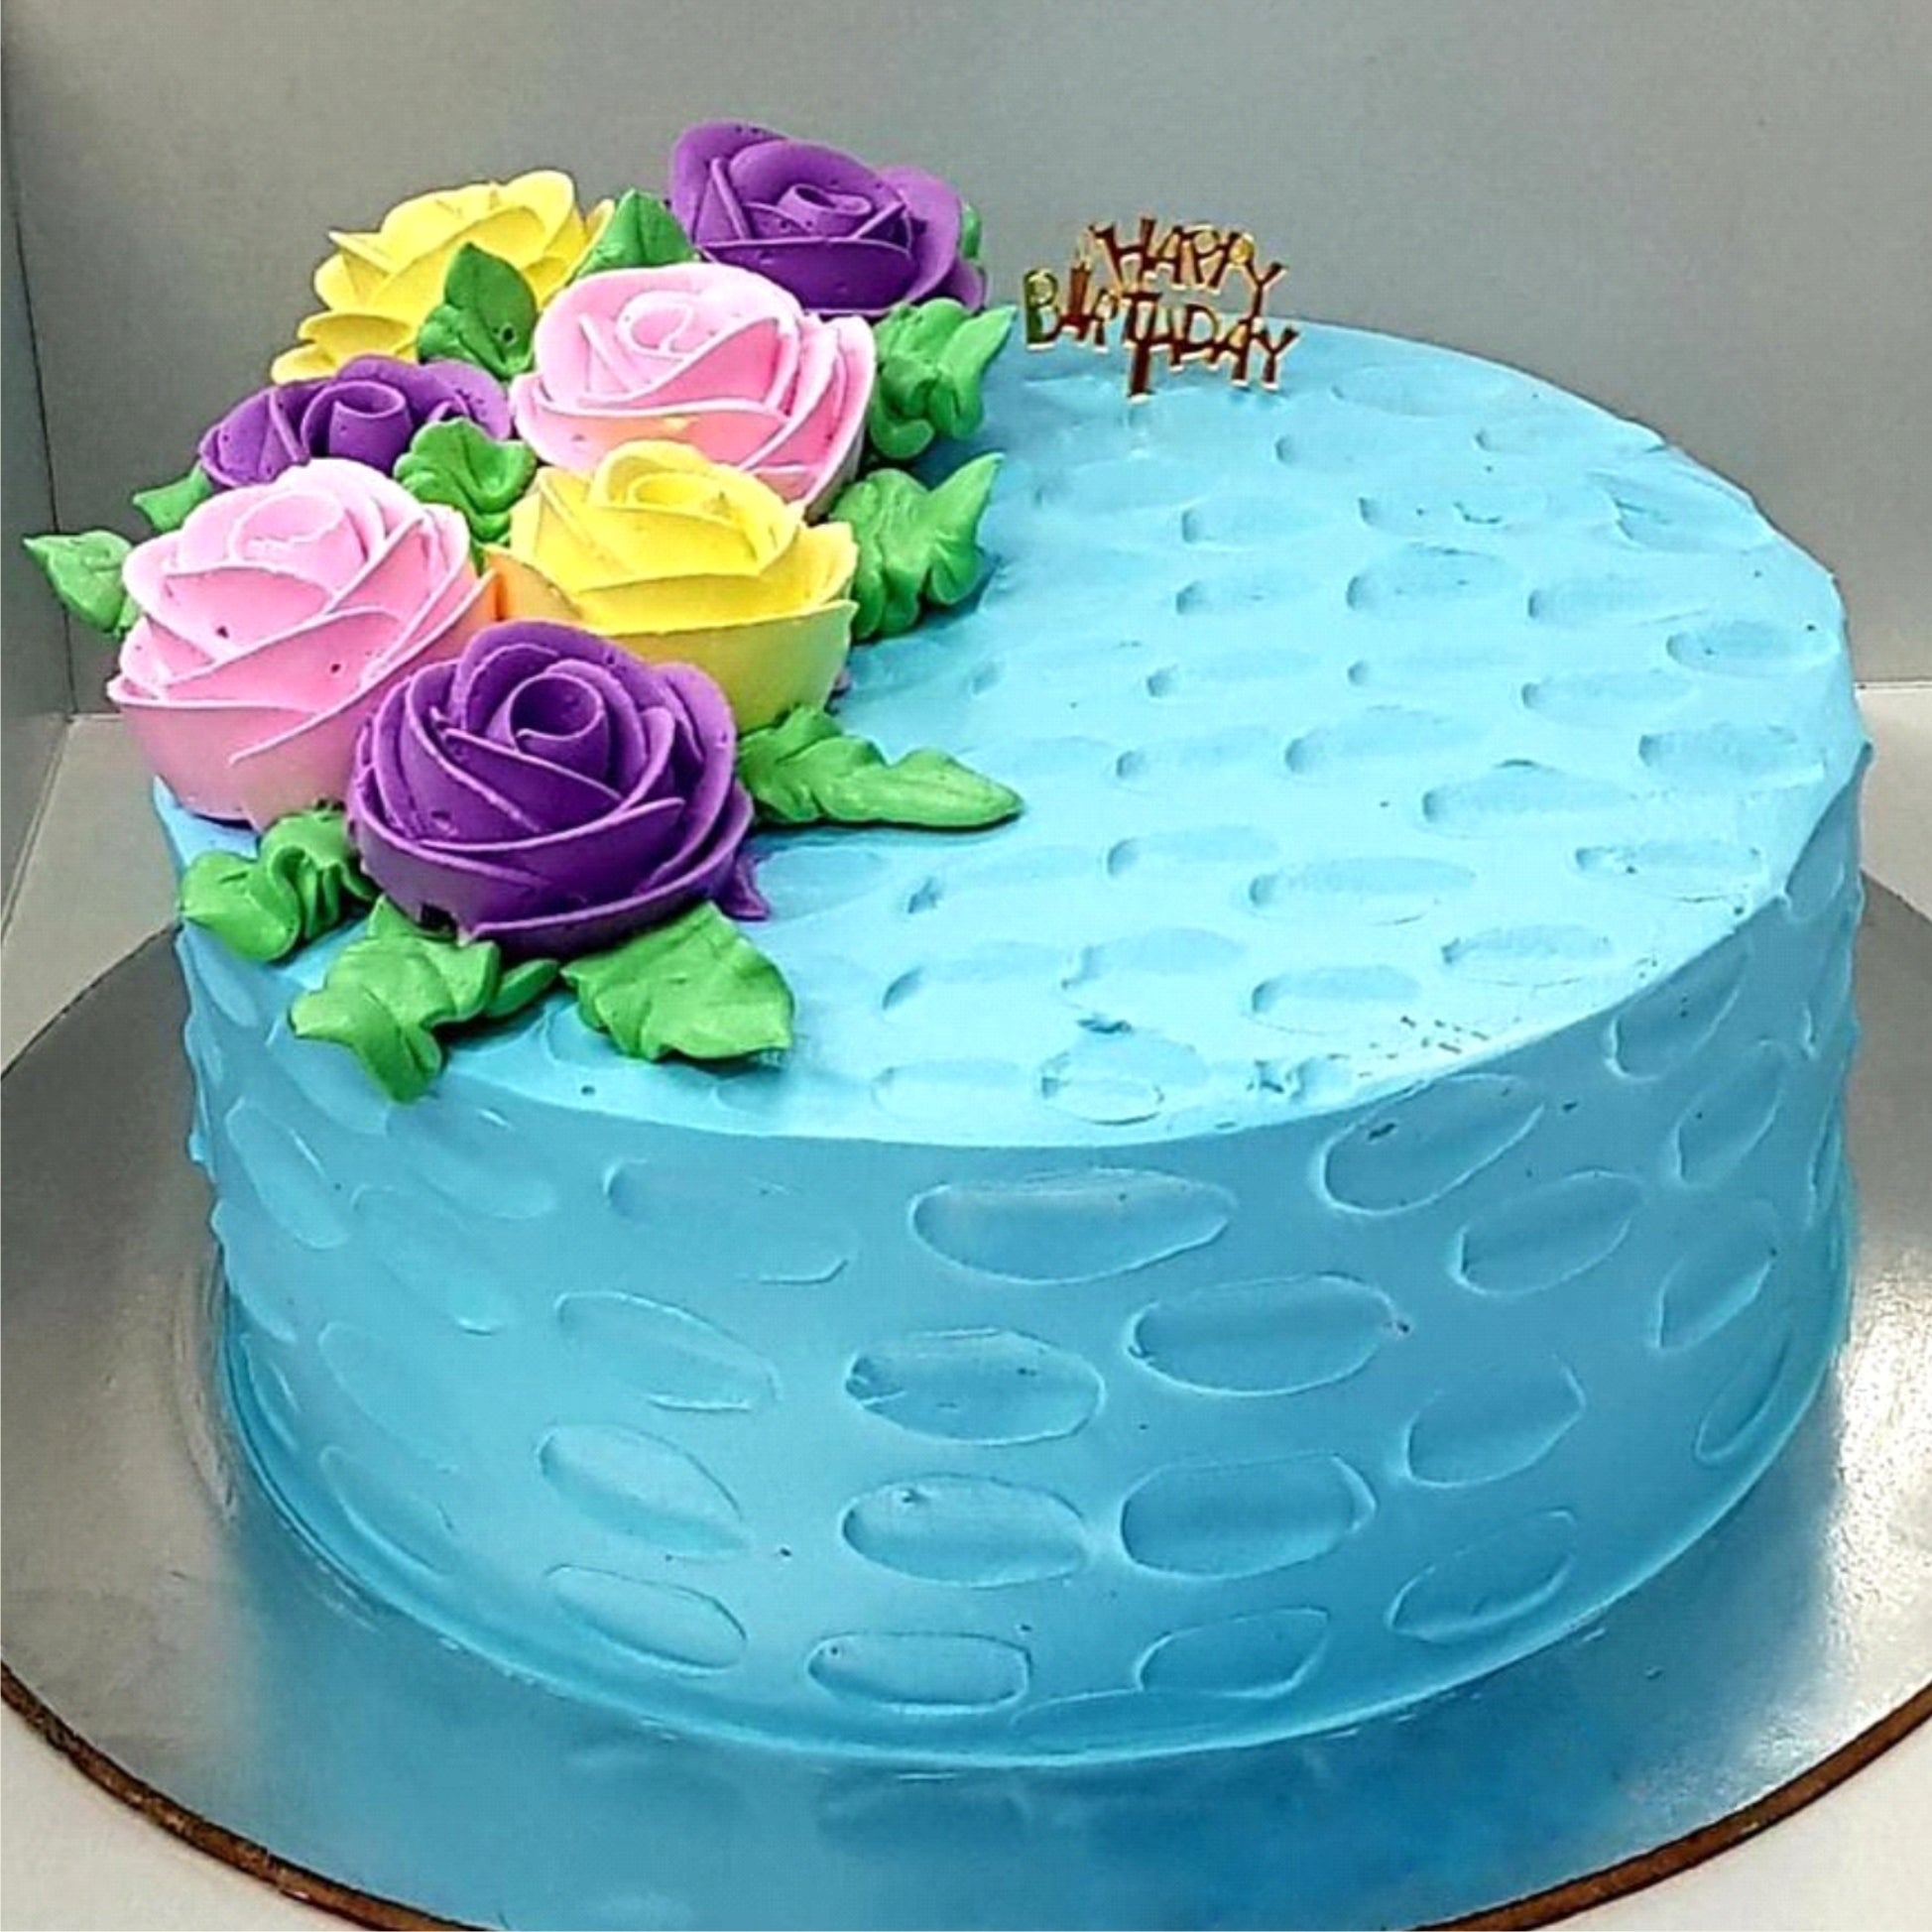 Floral Appliqué Cake Design